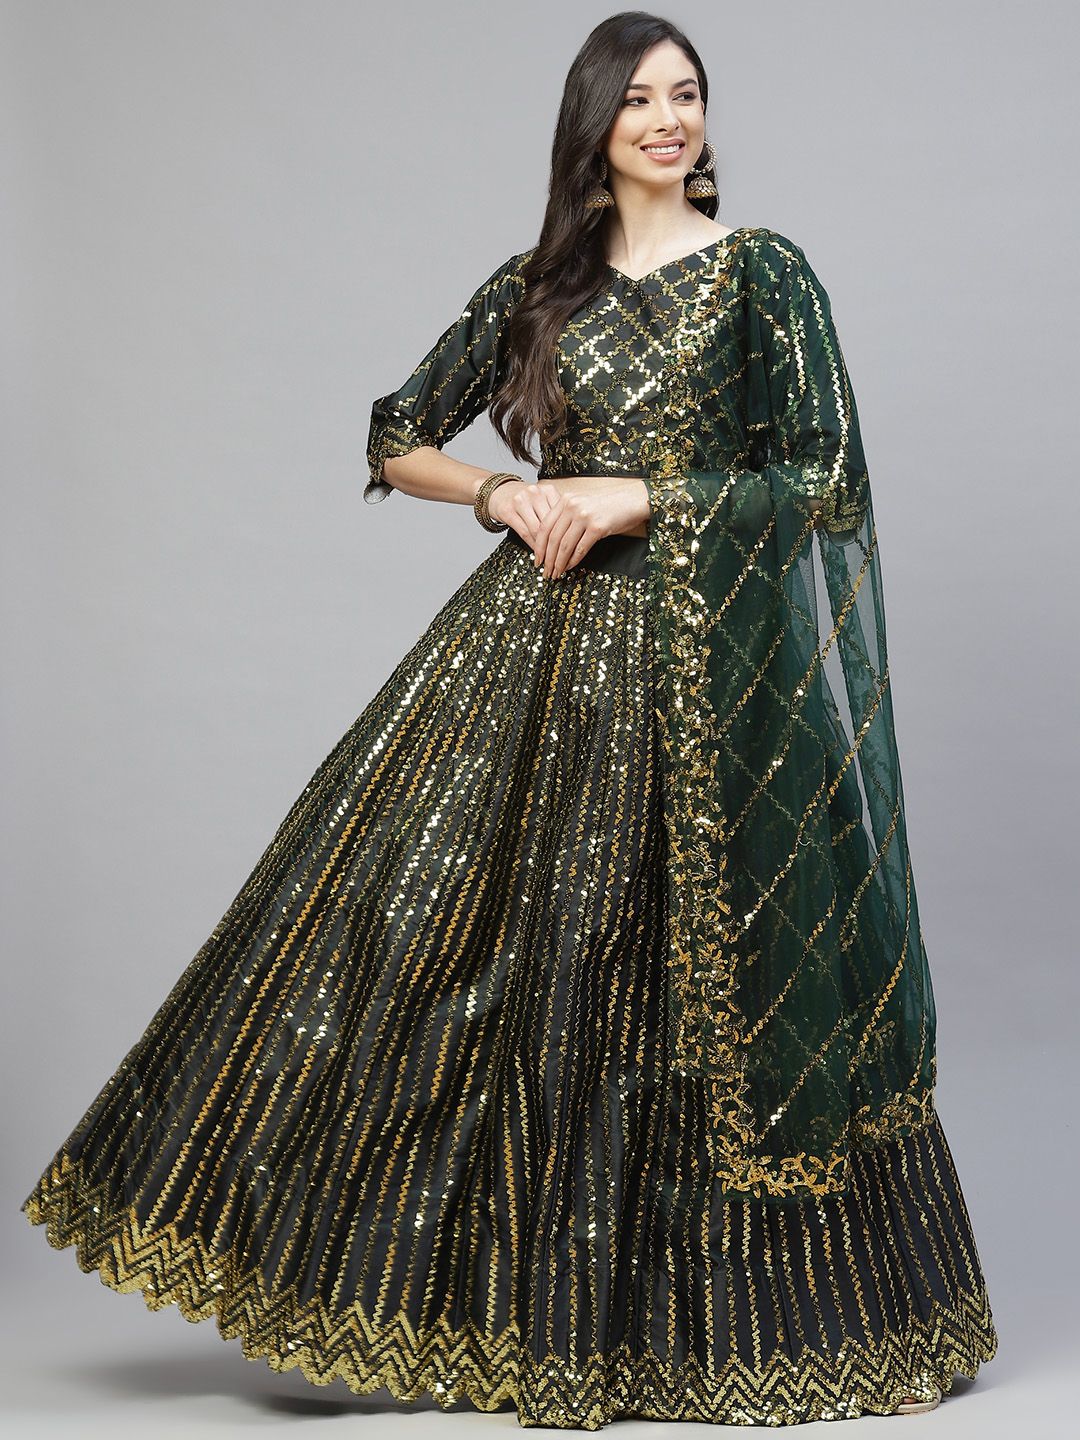 Readiprint Fashions Green & Gold-Toned Embellished Sequinned Semi-Stitched Lehenga Choli Price in India